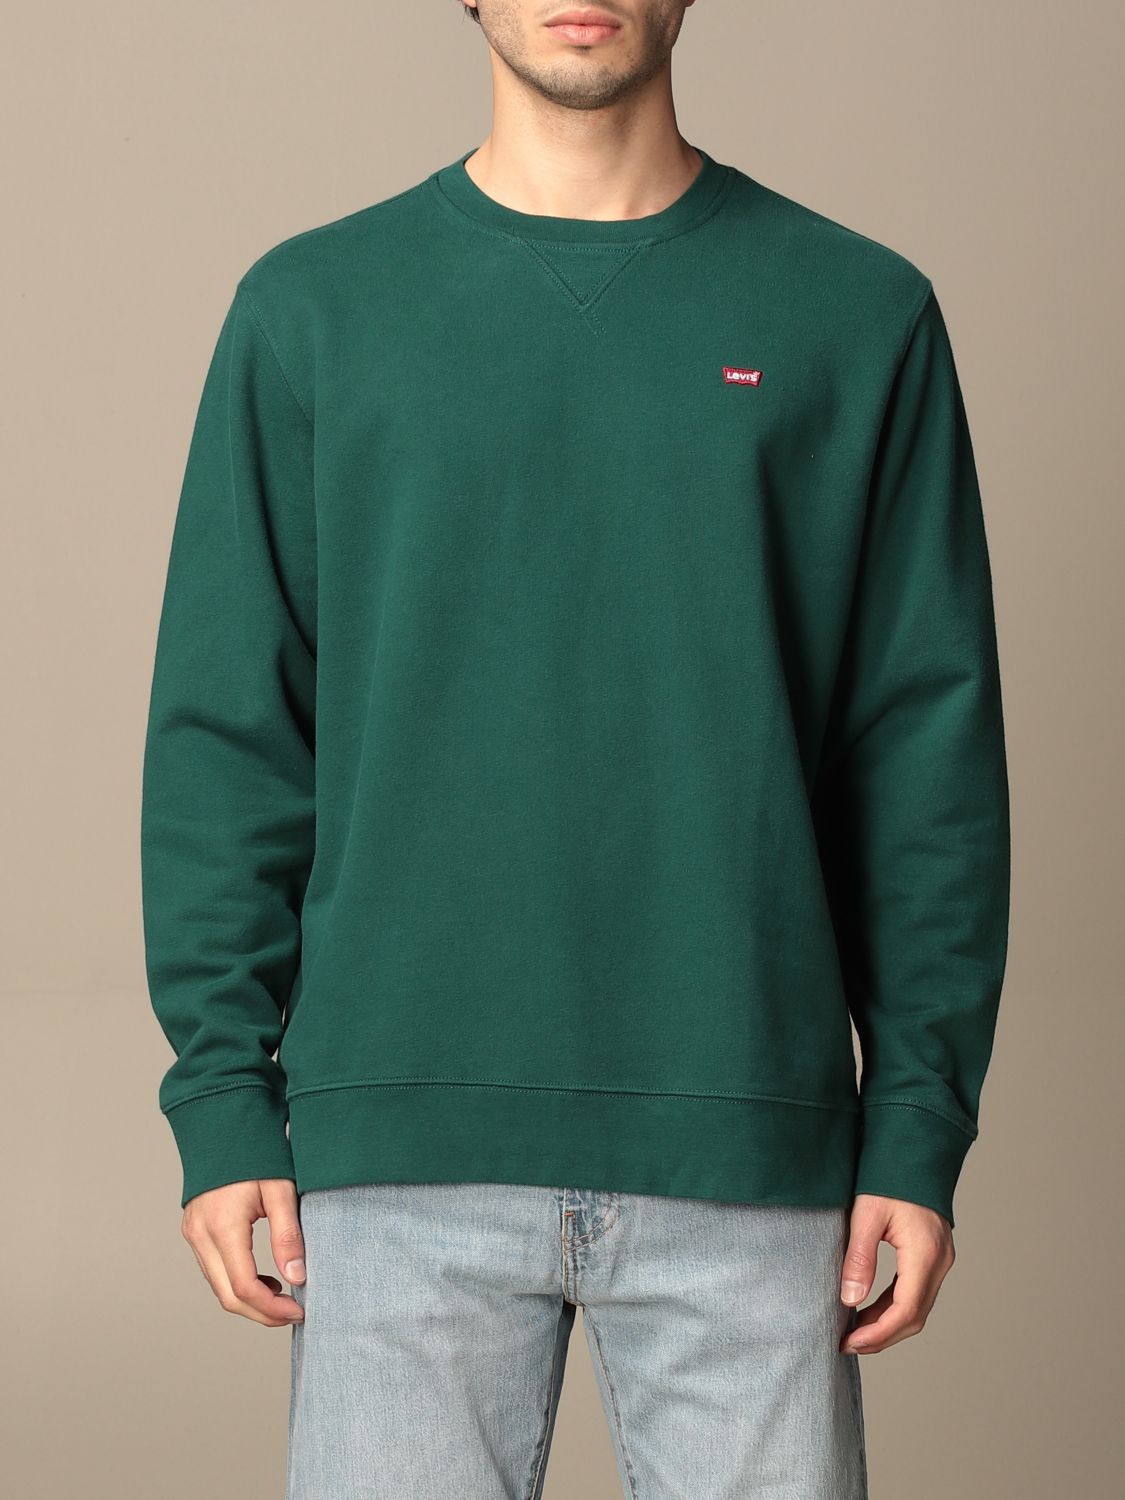 levi's green sweatshirt